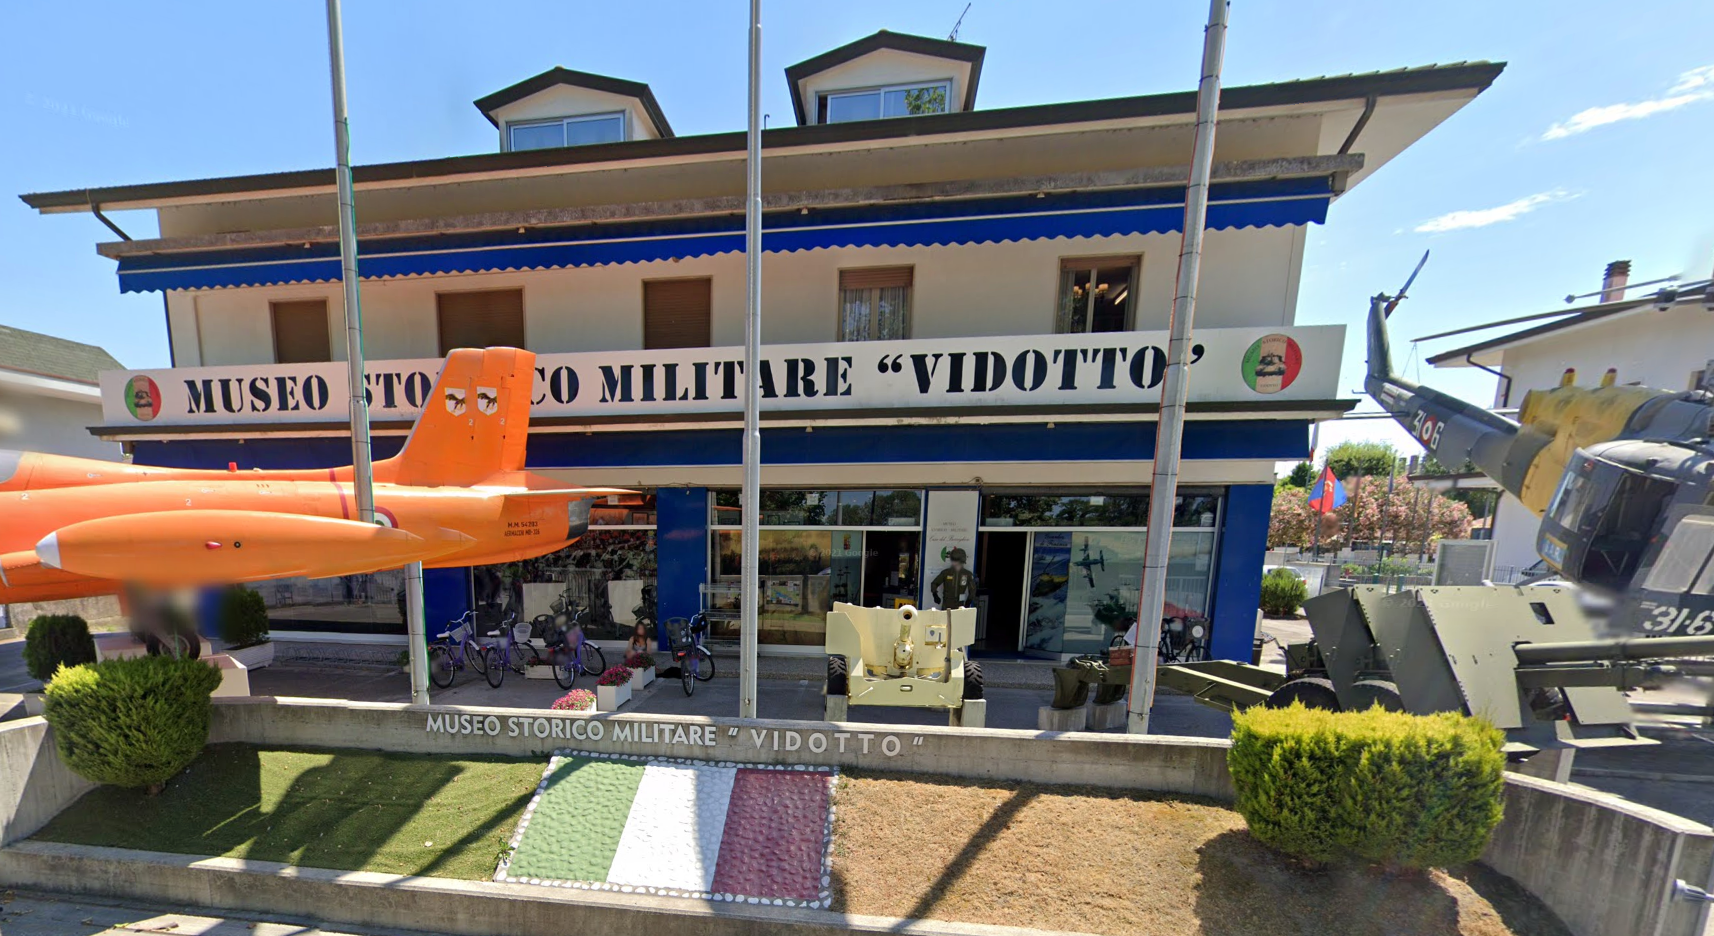 Military Historical Museum “Vidotto”